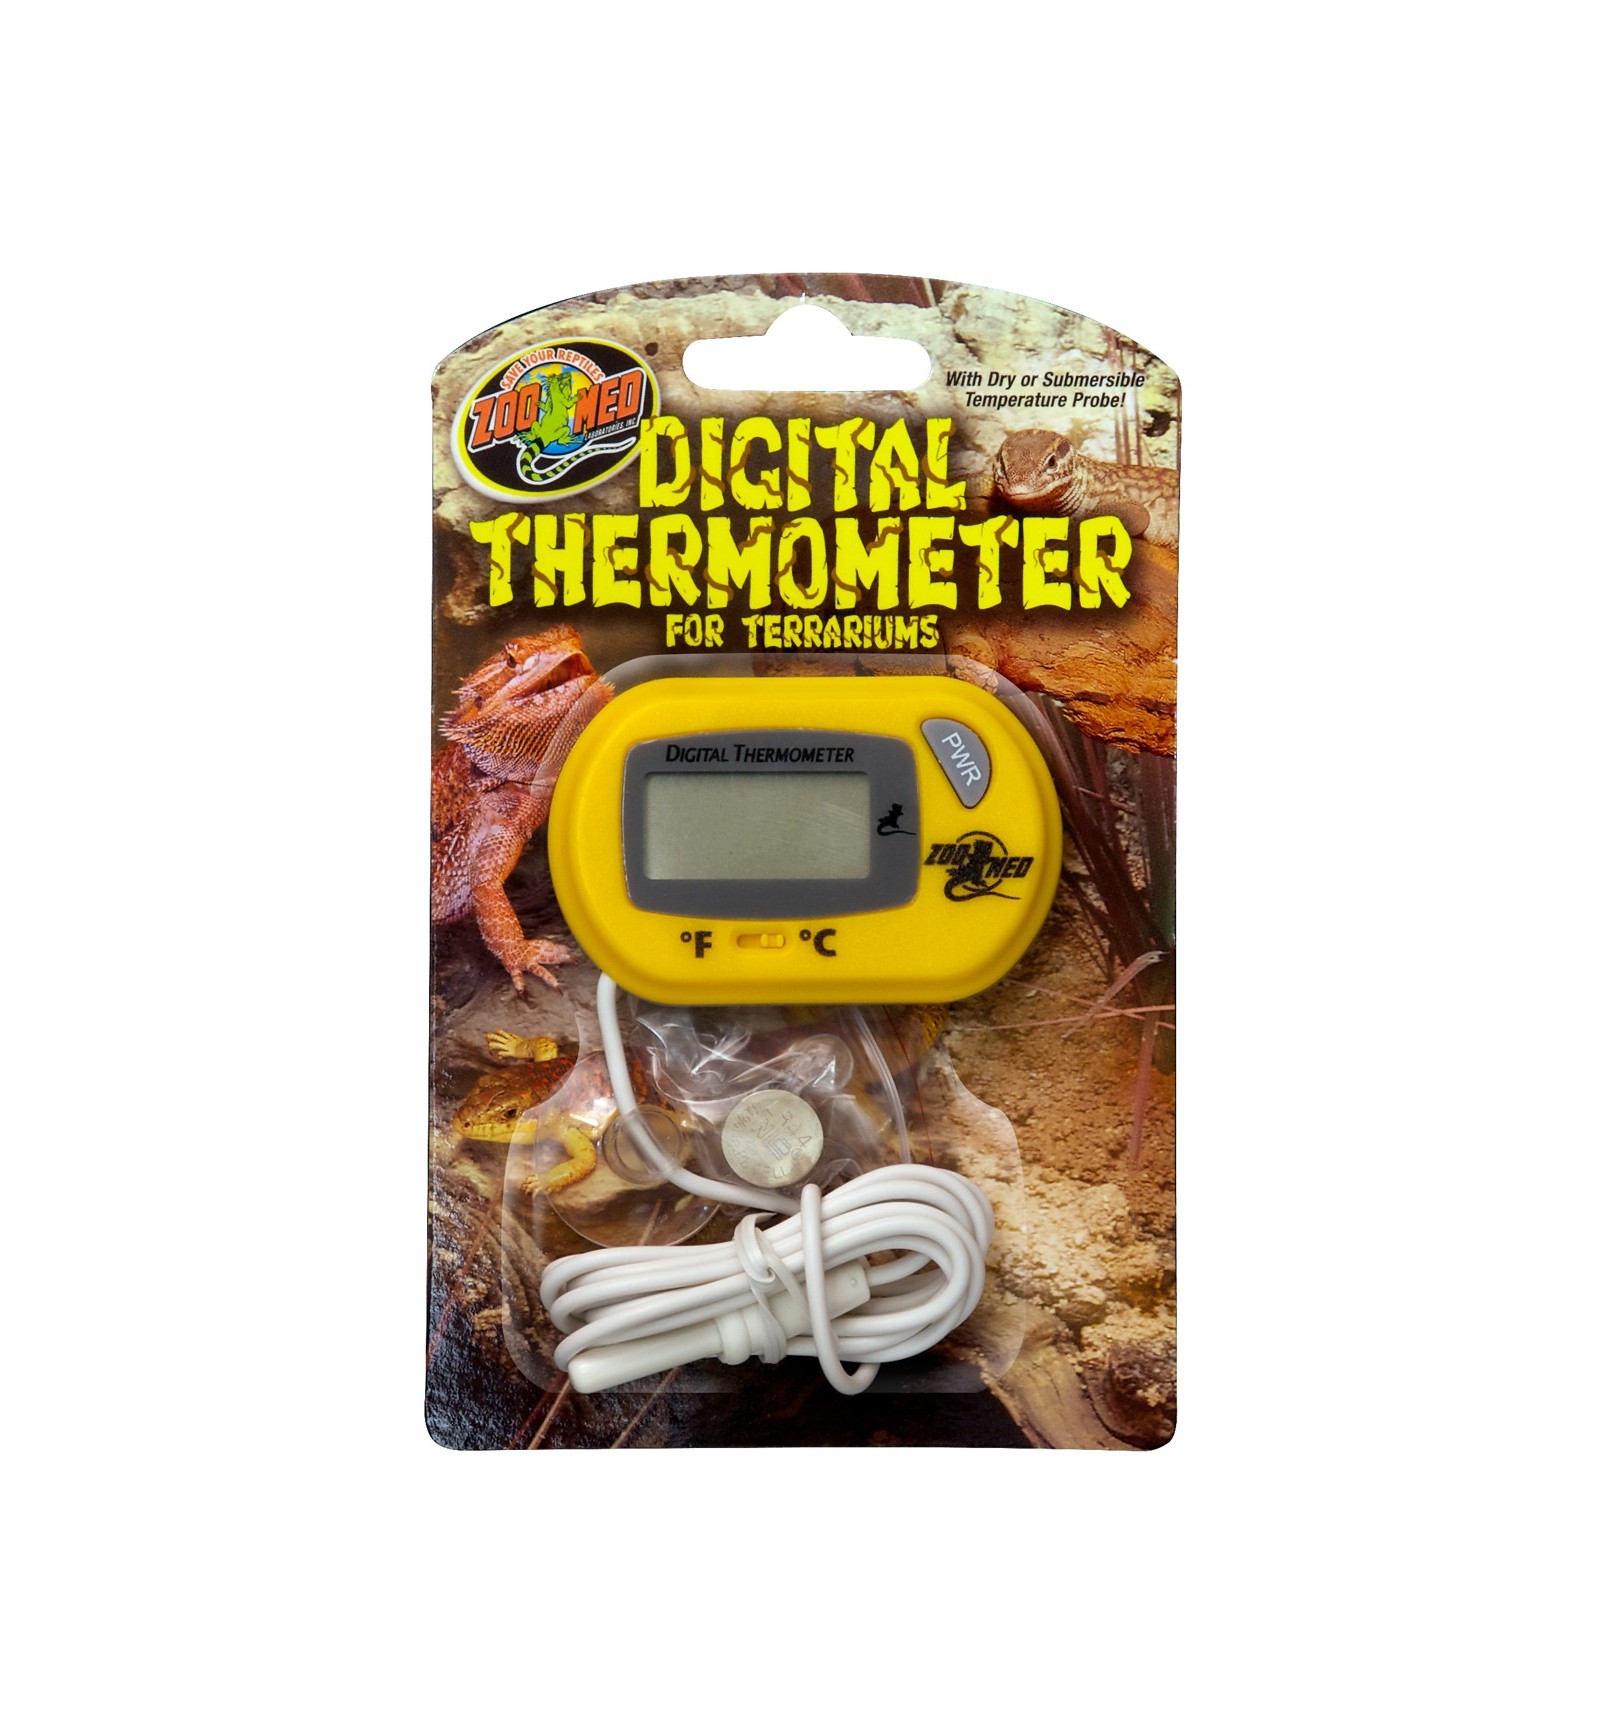 Thermomètre Digital Humidité